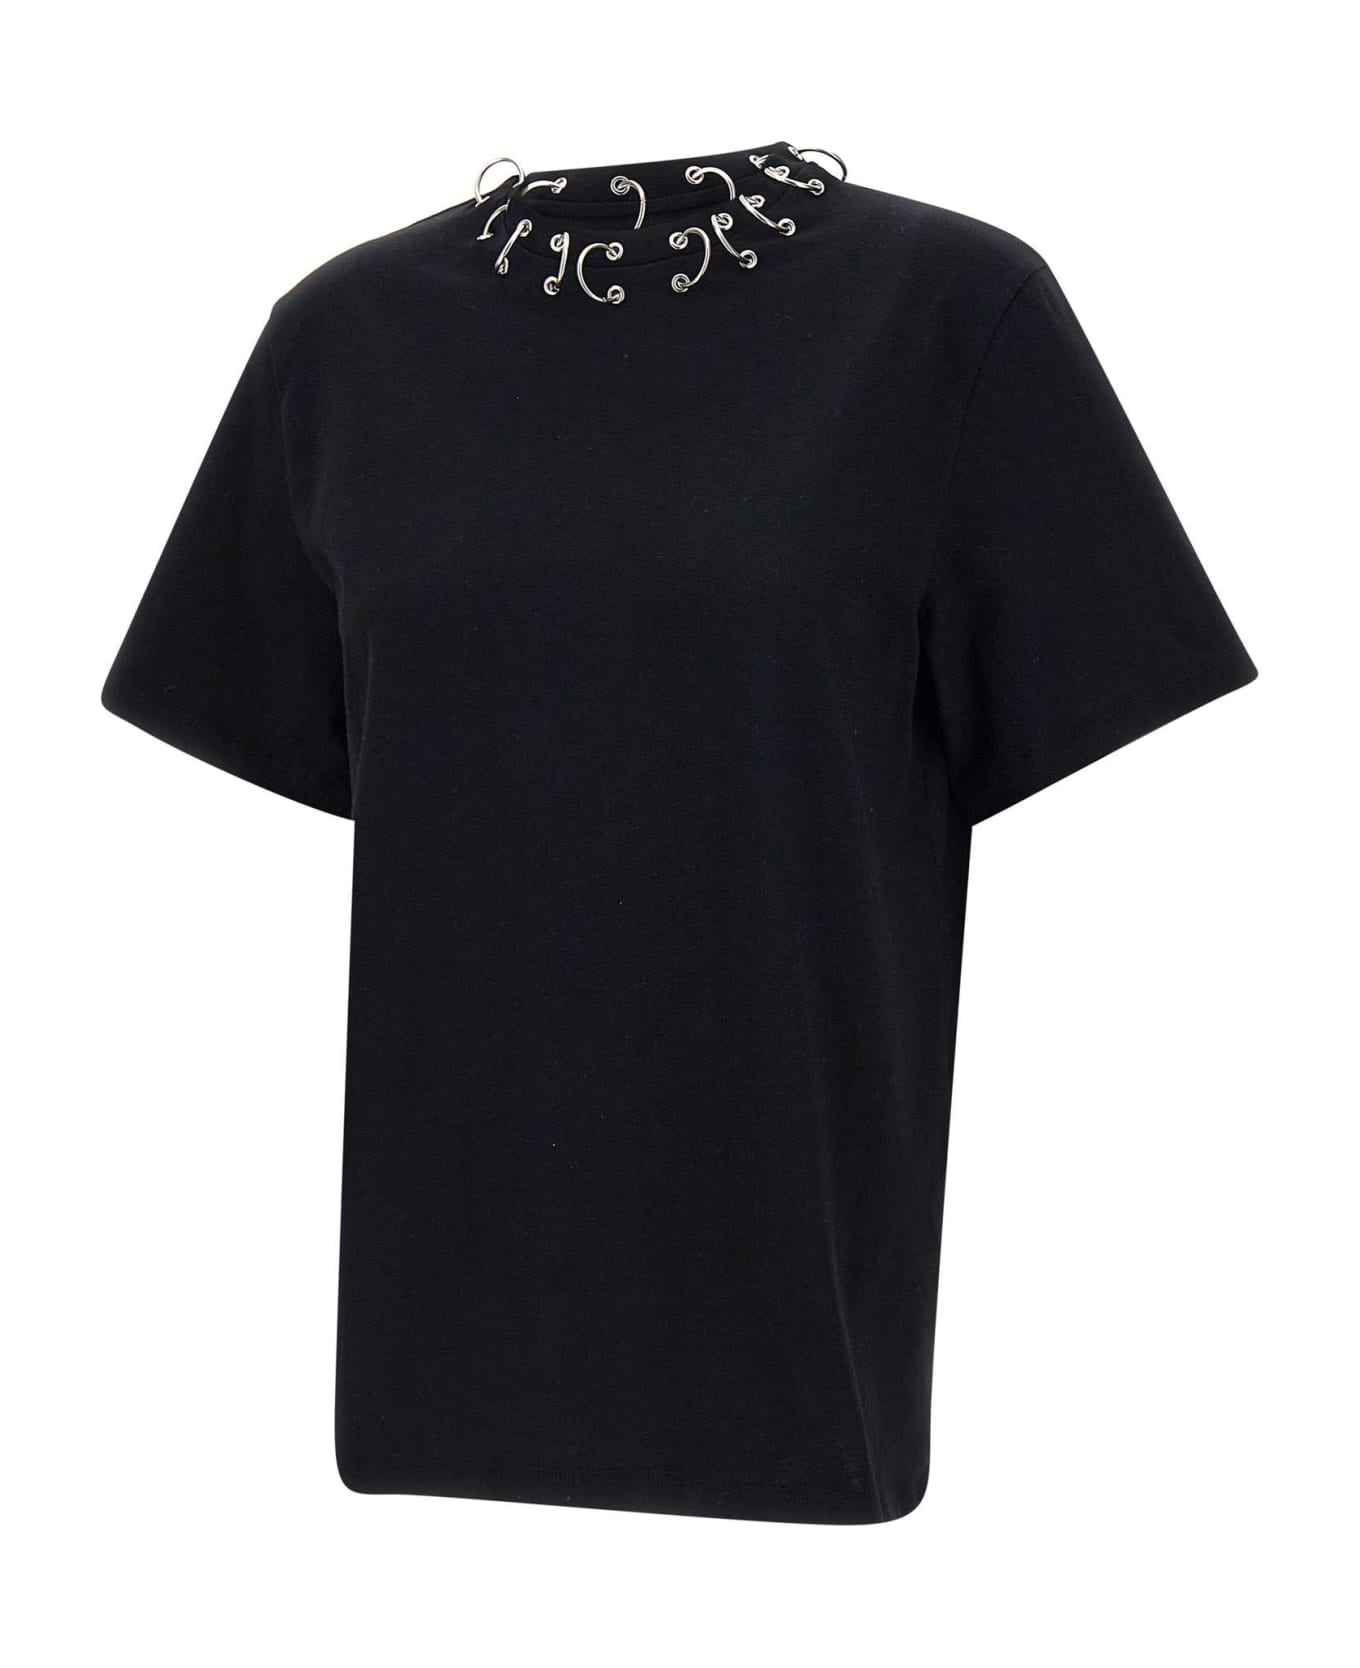 Rotate by Birger Christensen "oversize Ring" Cotton T-shirt - BLACK